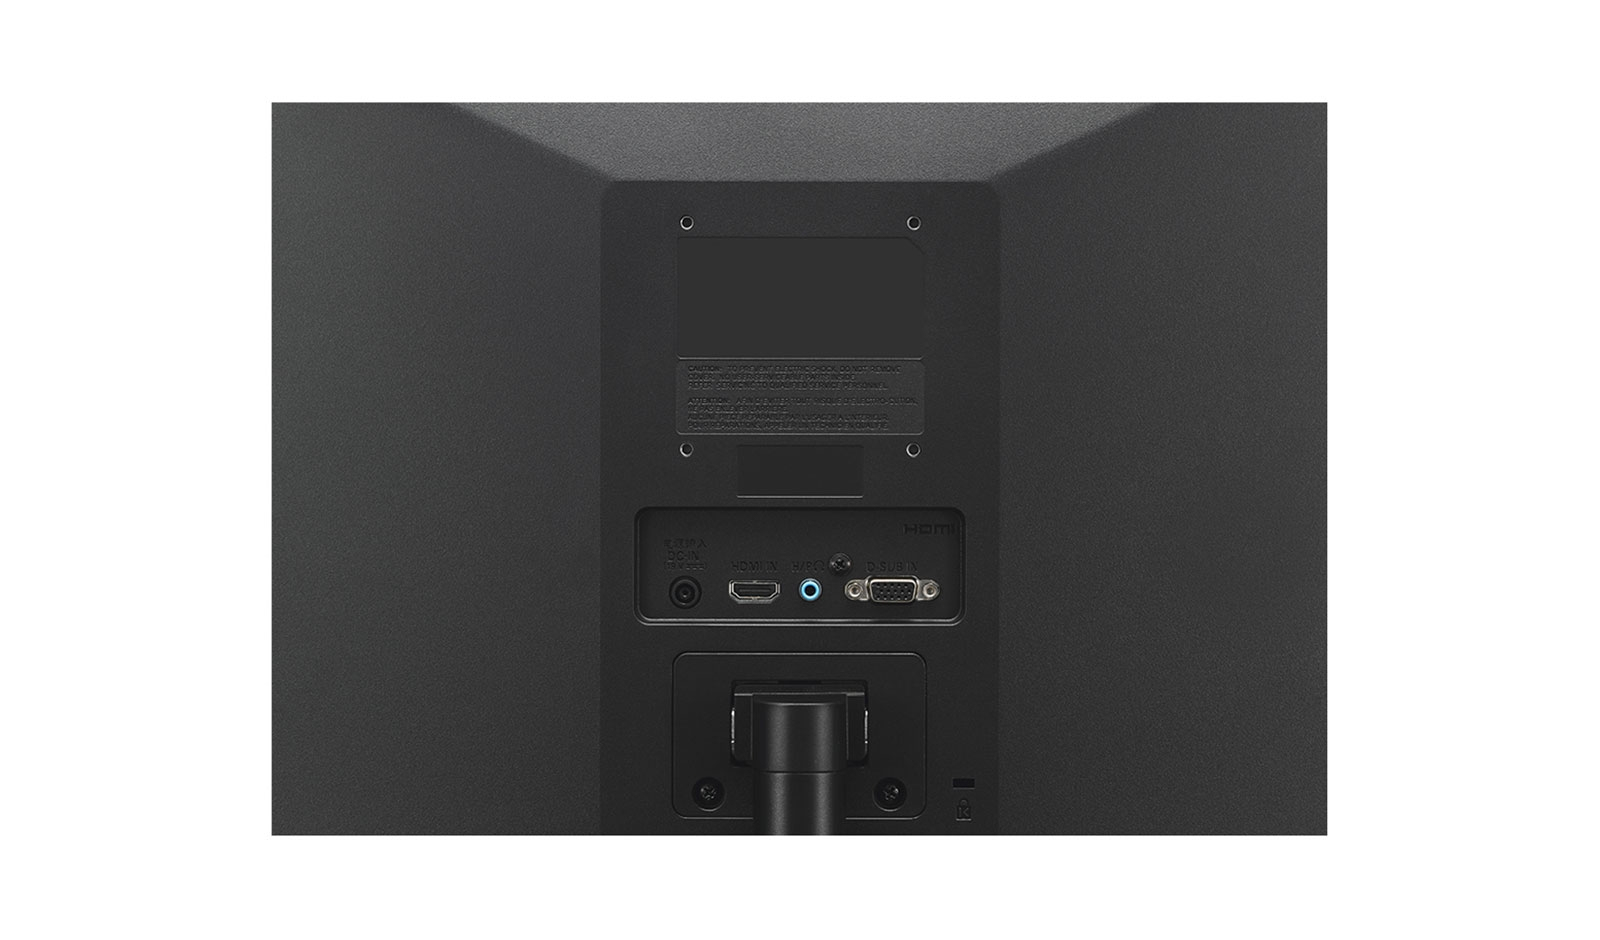 LG 22MK400H-B Monitor PC 55,9 cm (22